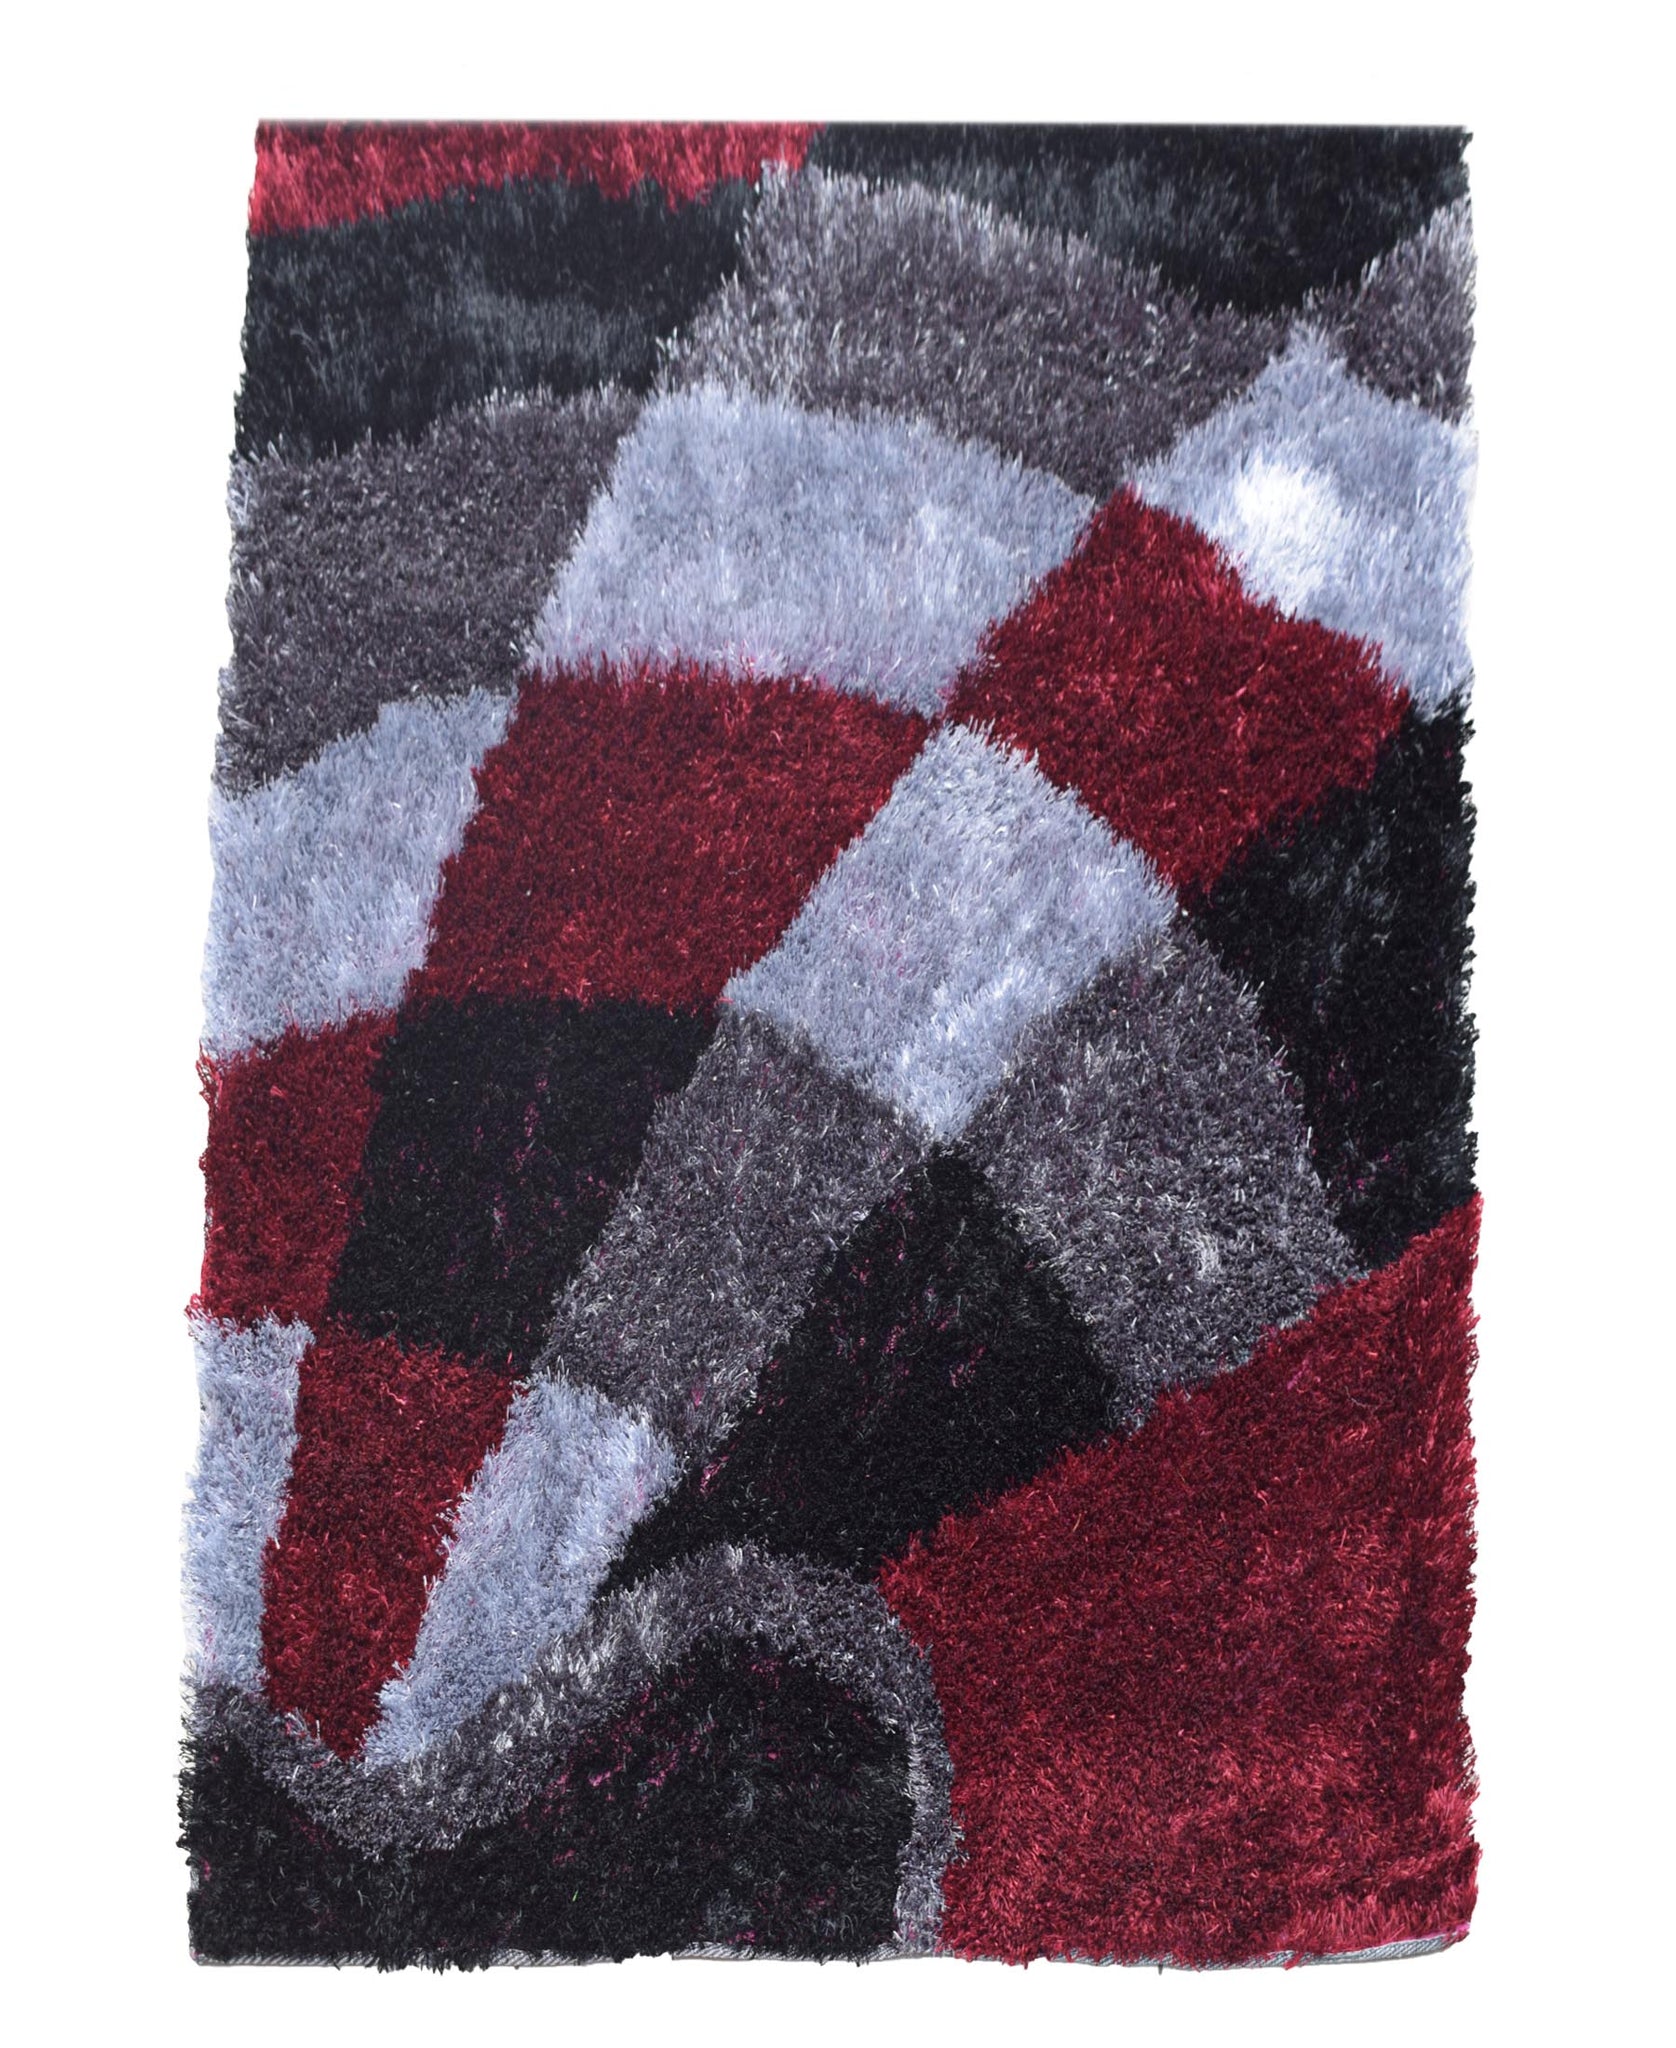 Shaggy Checkered Carpet 1200mm x 1600mm - Red, Grey & Black